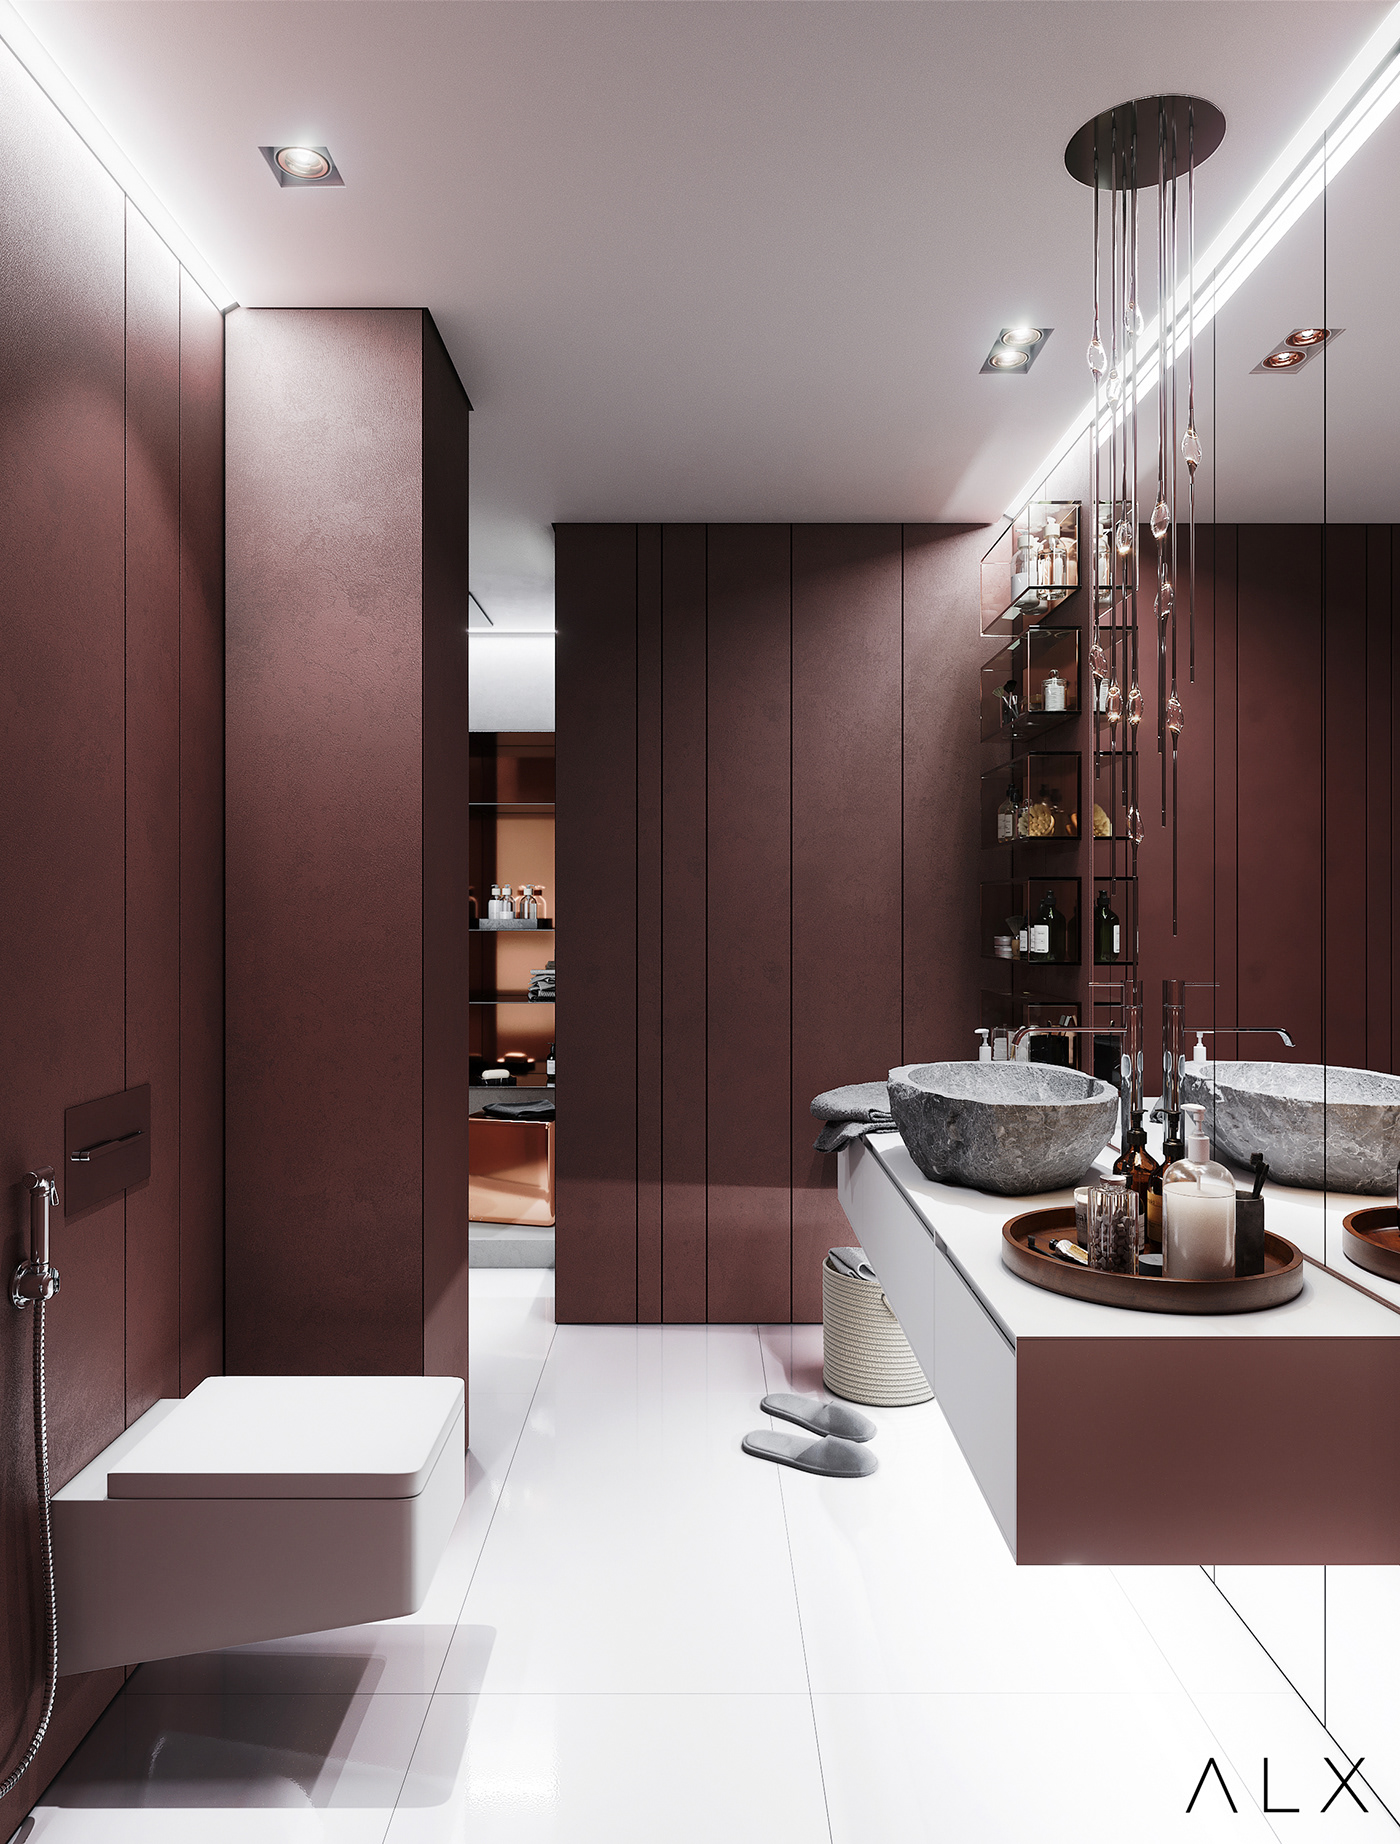 architecture Interior bathroom design CGI visualization CoronaRender  colors Minimalism Render